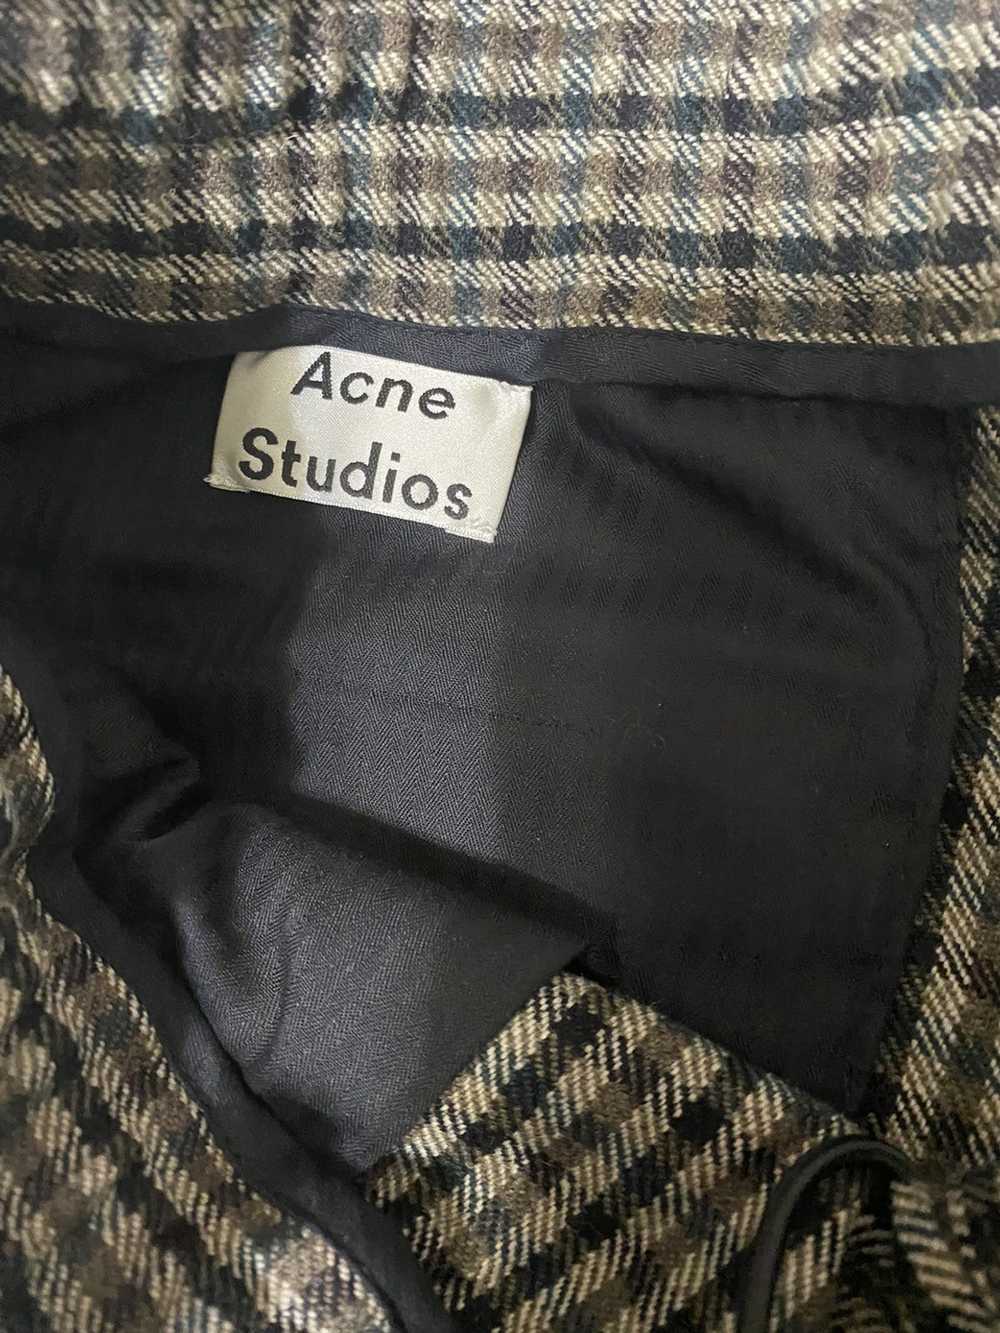 Acne Studios Acne studios pants - image 2